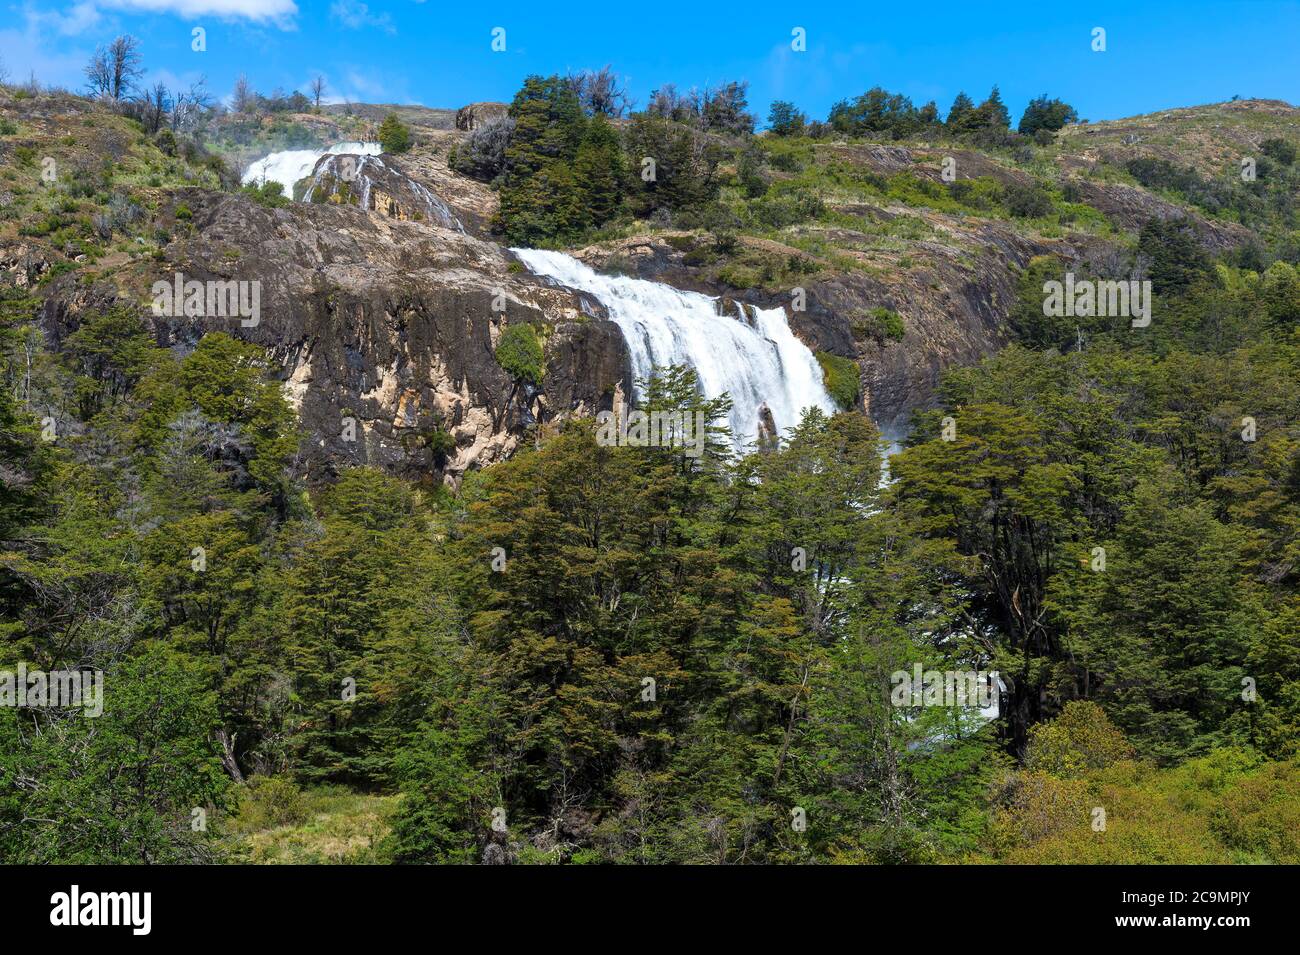 Cascate di El Maqui, Puerto Guadal, autostrada Panamericana, Regione di Aysen, Patagonia, Cile Foto Stock